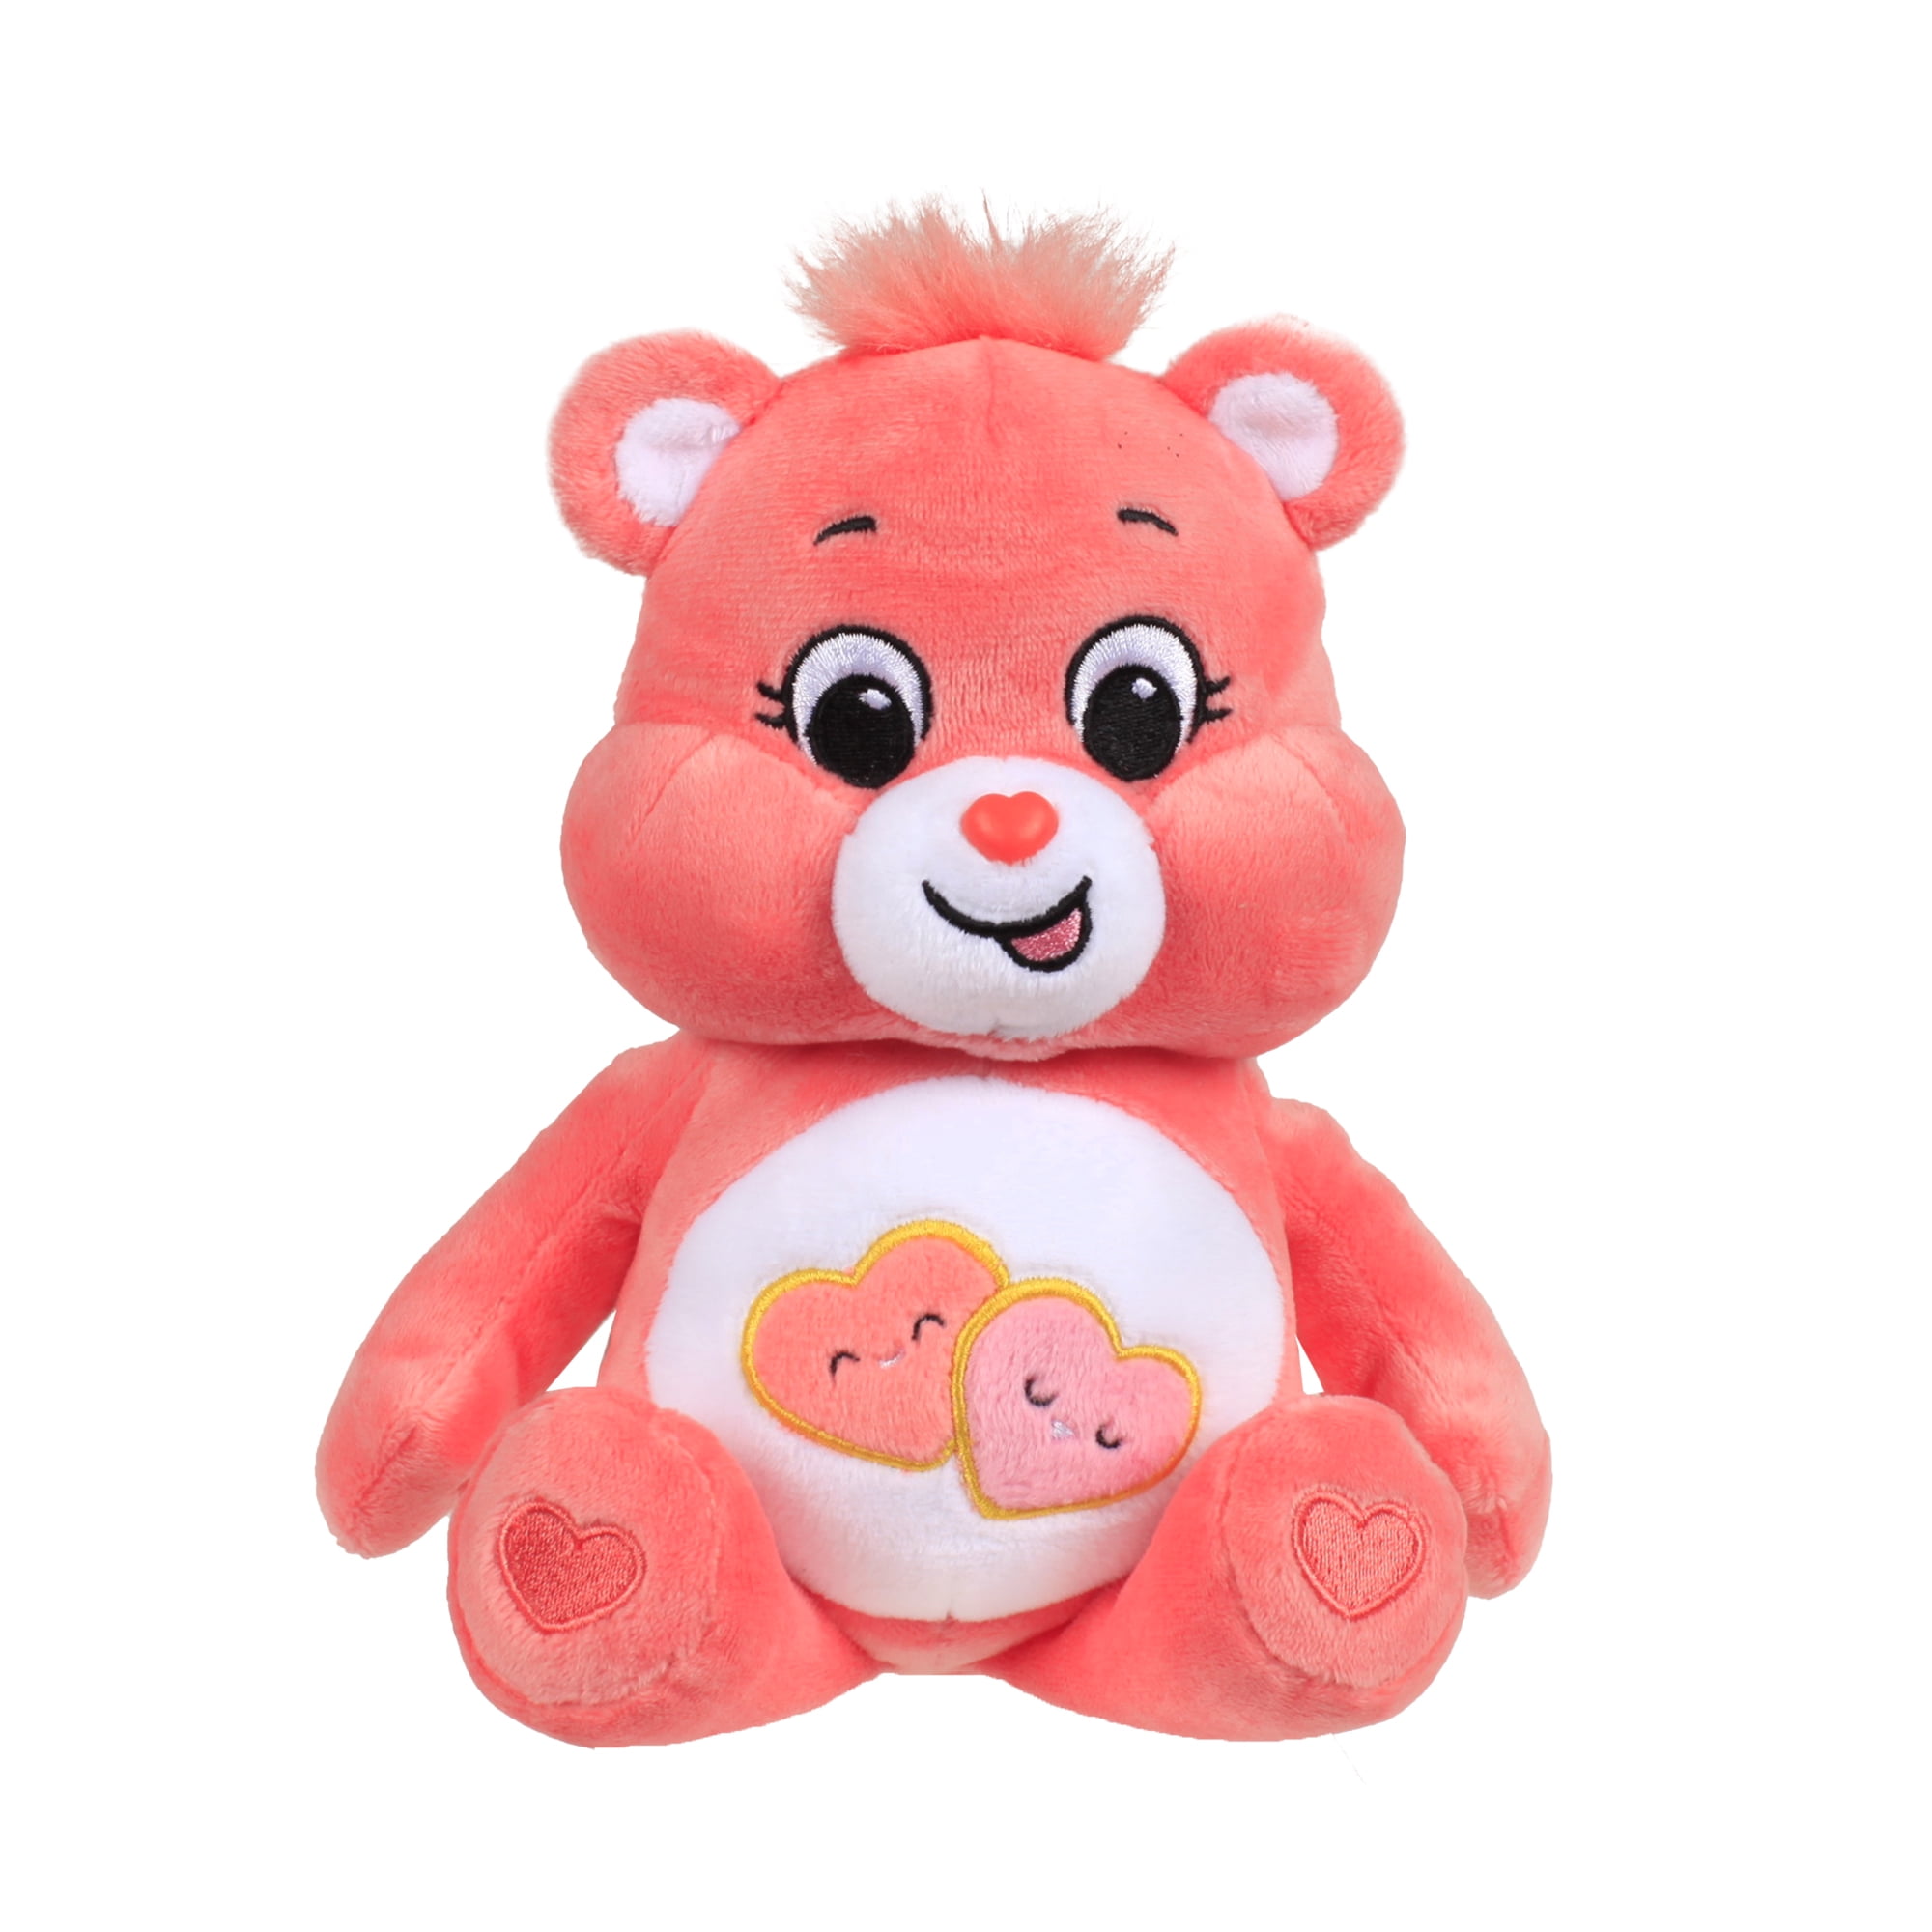 Care Bears 9 inch Bean Plush Harmony Bear 5 Pack for sale online 